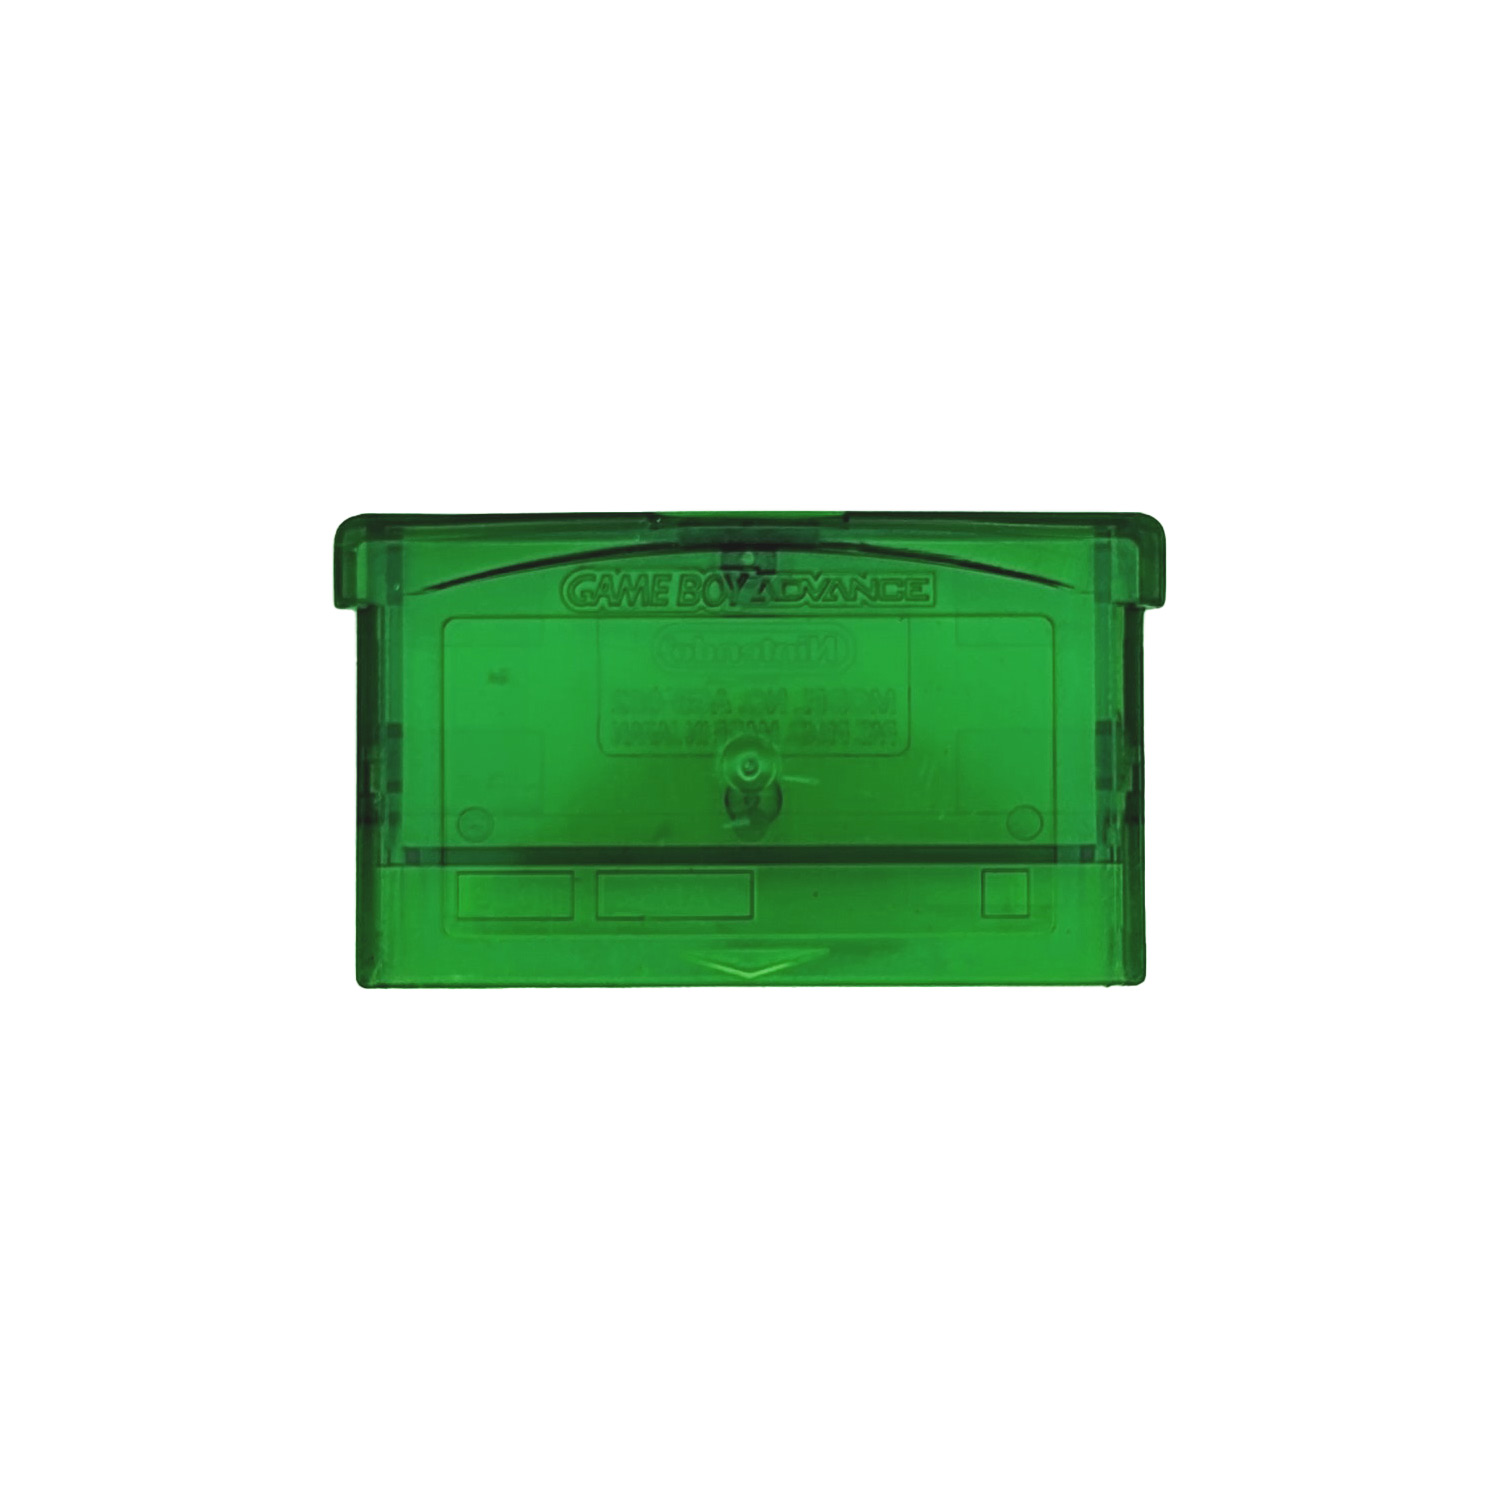 Game Boy Advance Modulebehuizing (Transparant groen)